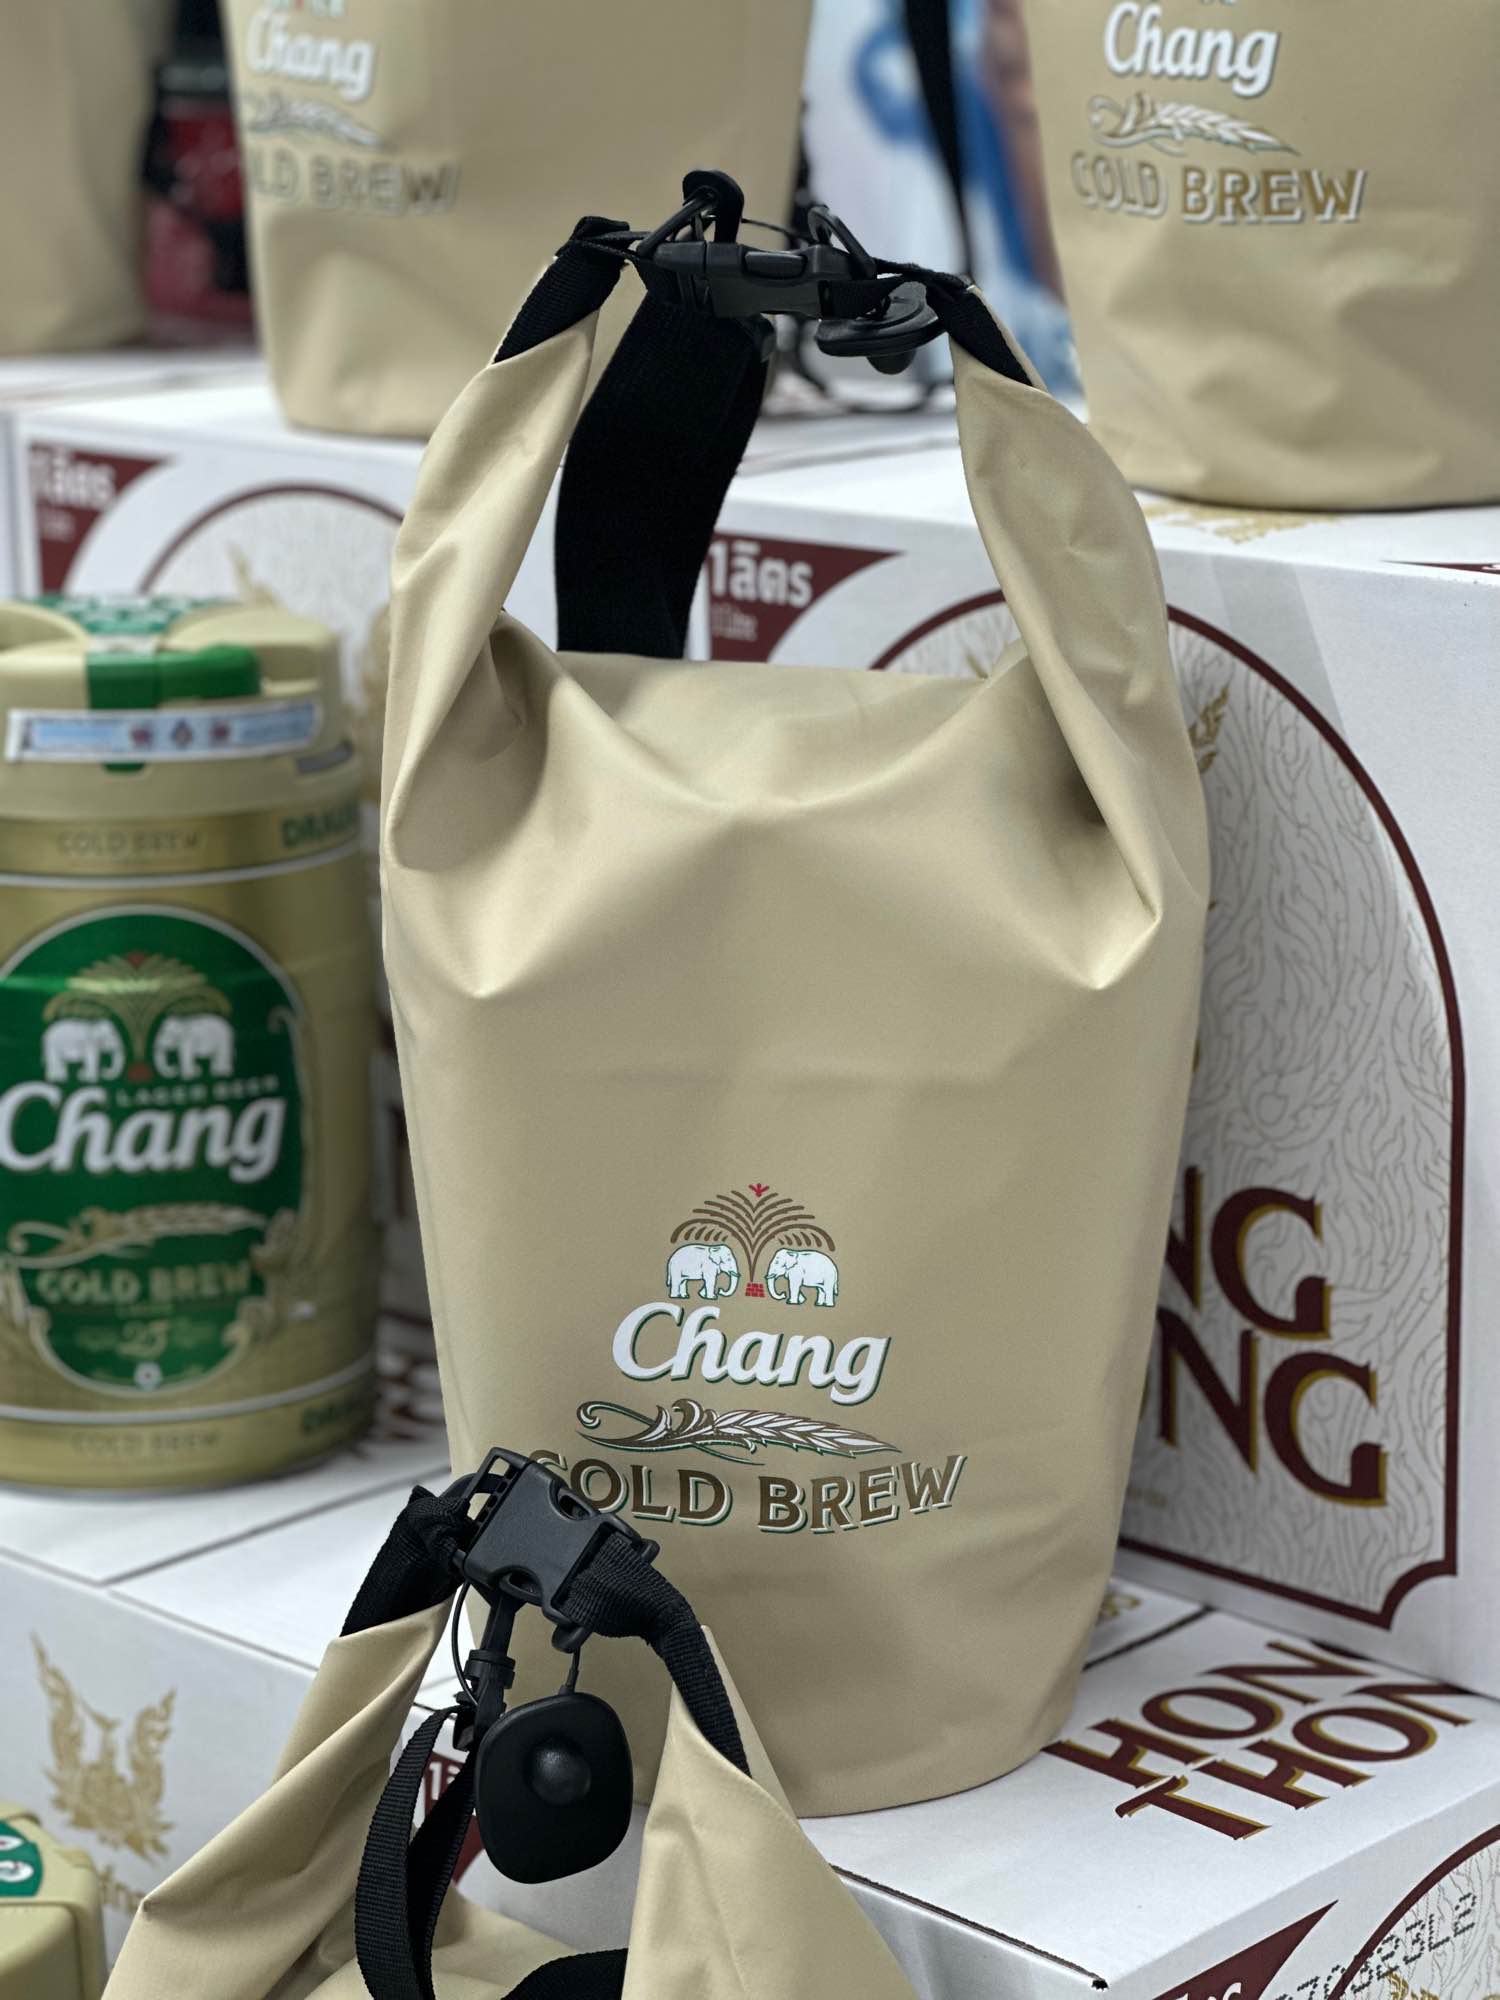 Chang Cold Brew Cool Club x STANLEY Mug (No cap)